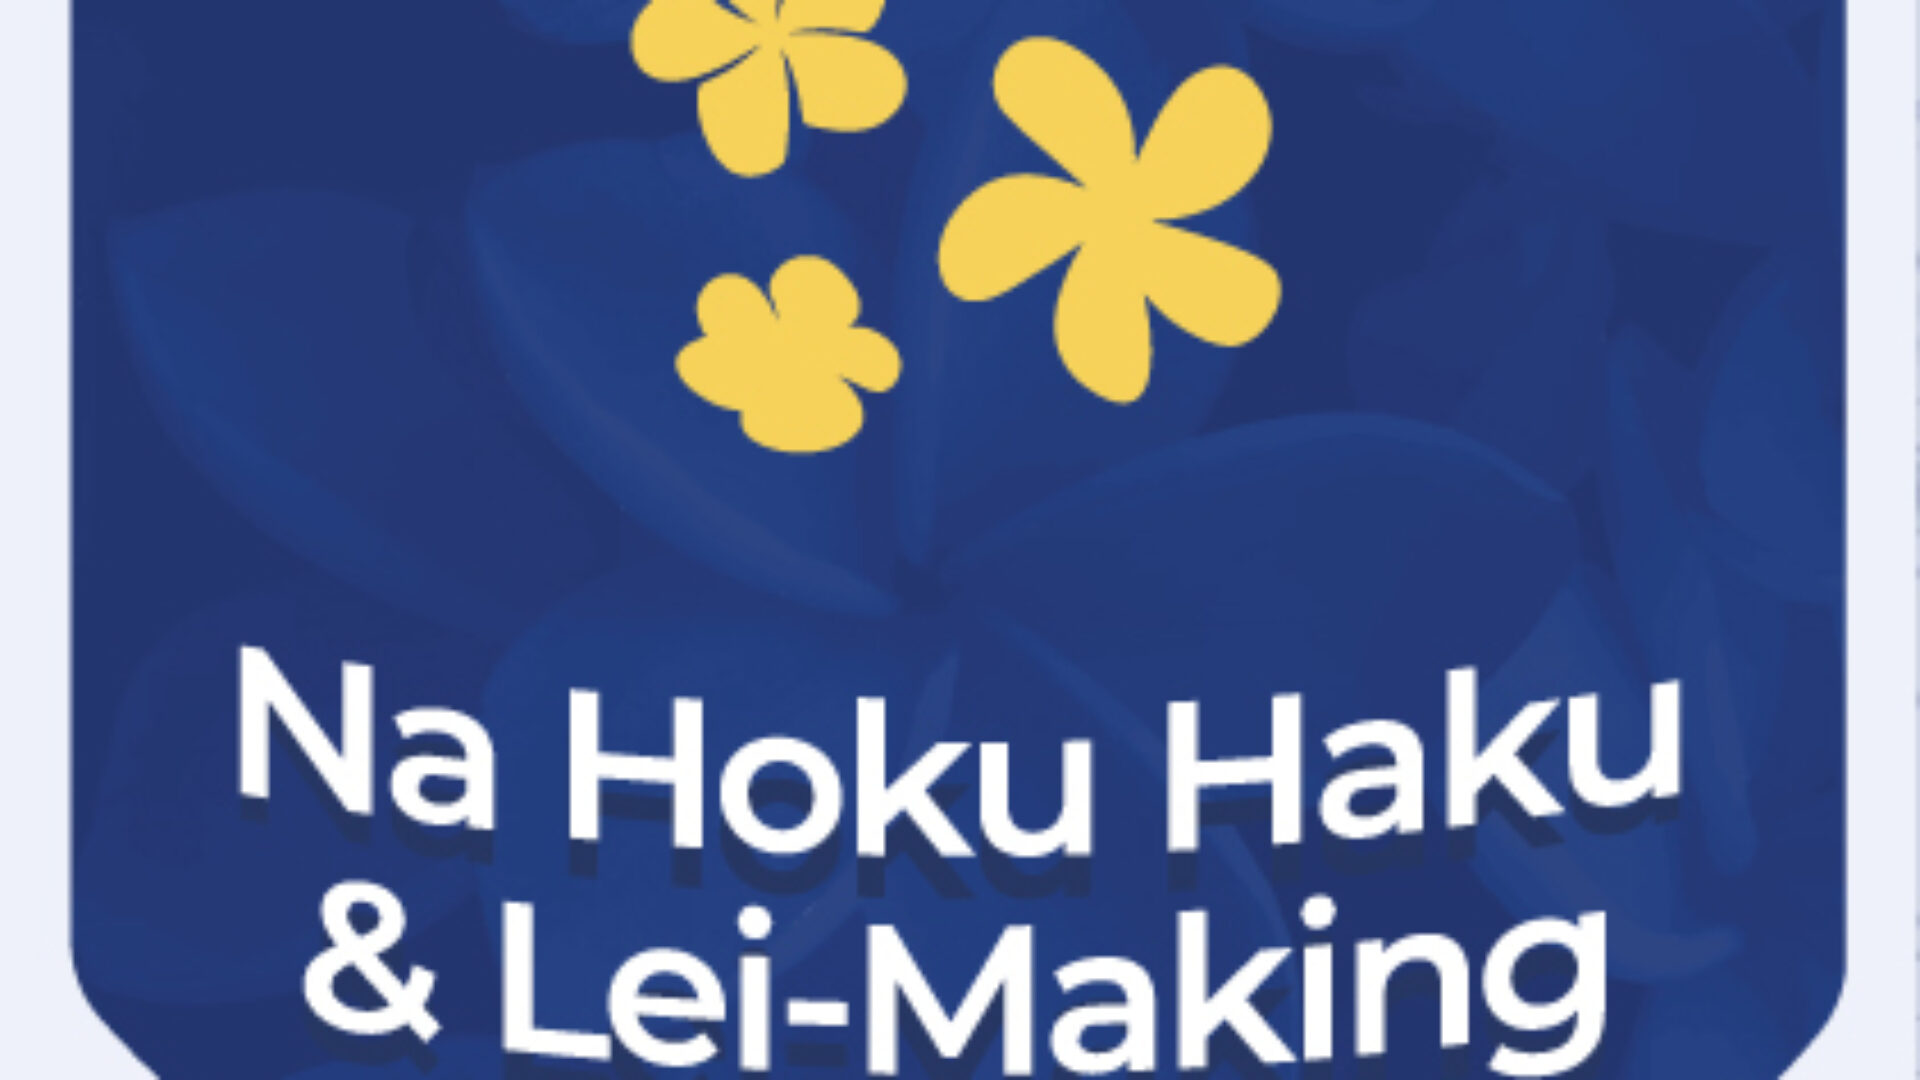 Na Hoku Haku & Lei-Making Workshop Series